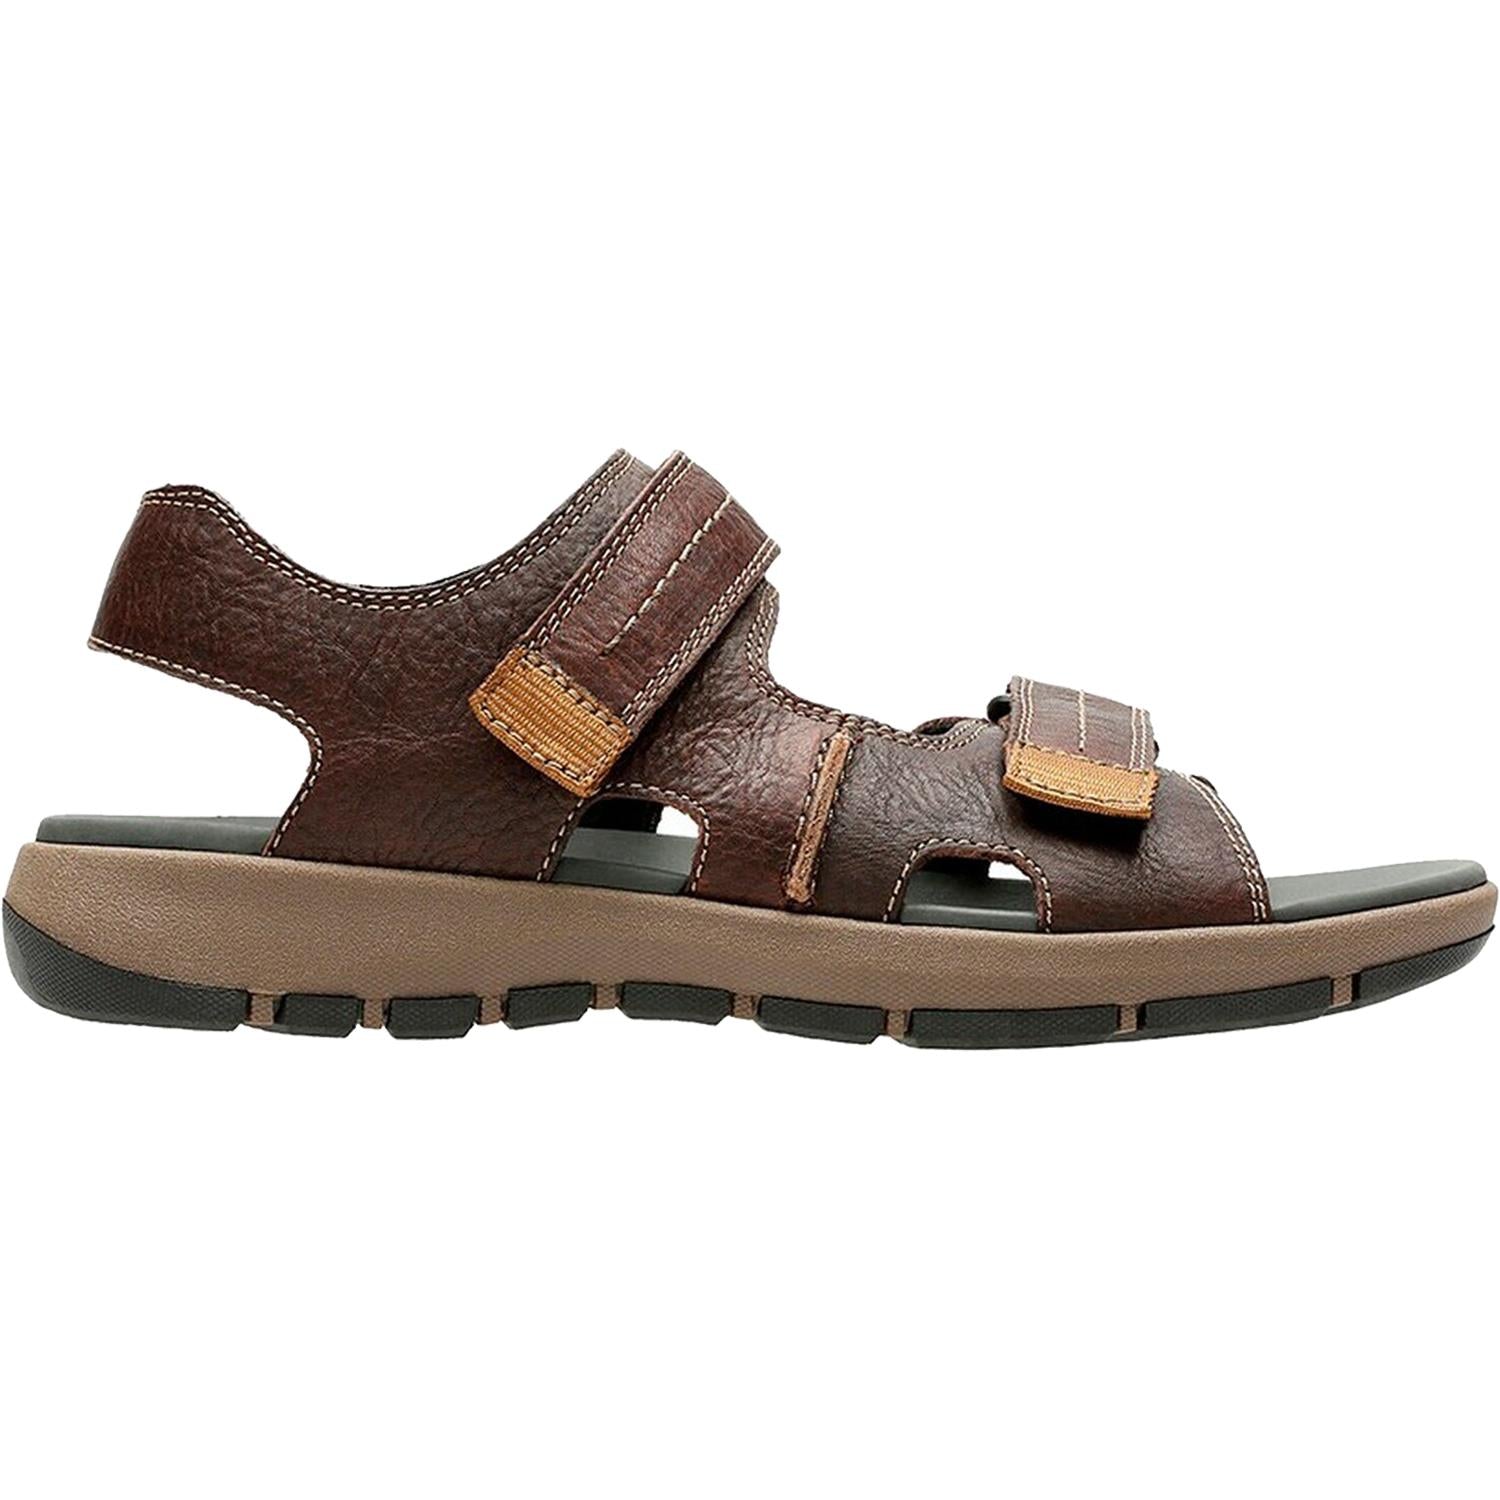 clarks mens sandals sale, Off 69%, www.iusarecords.com